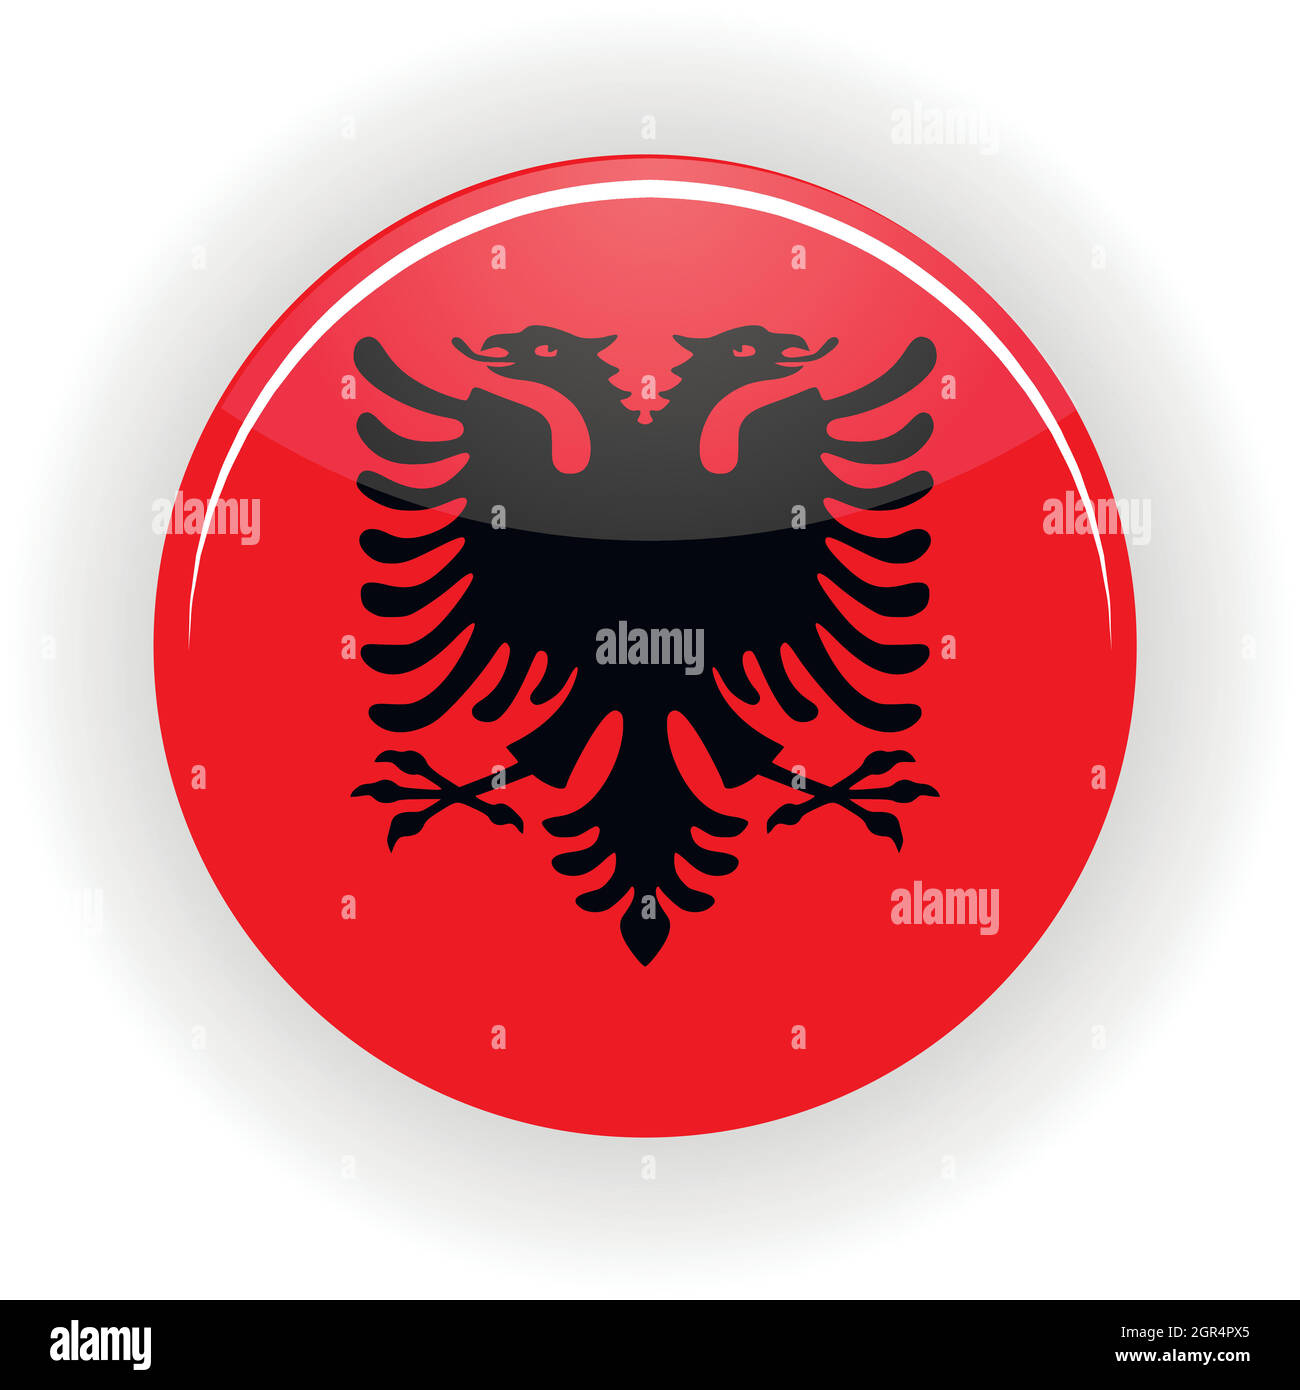 Albania Stock Vector Images - Alamy